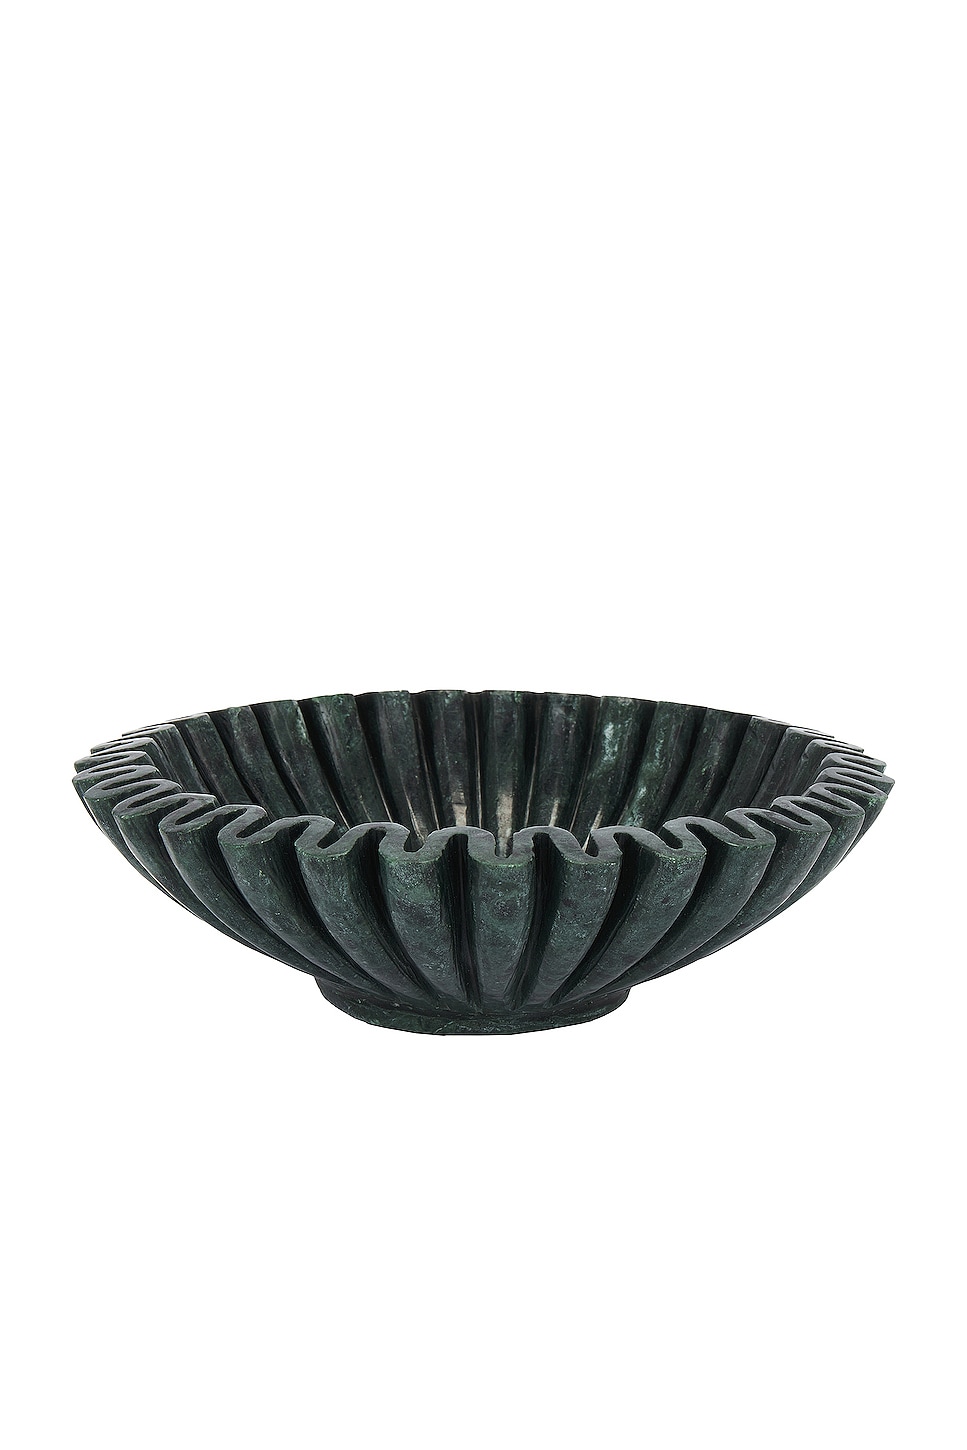 Image 1 of Anastasio Home Ruffle Bowl in Emerald